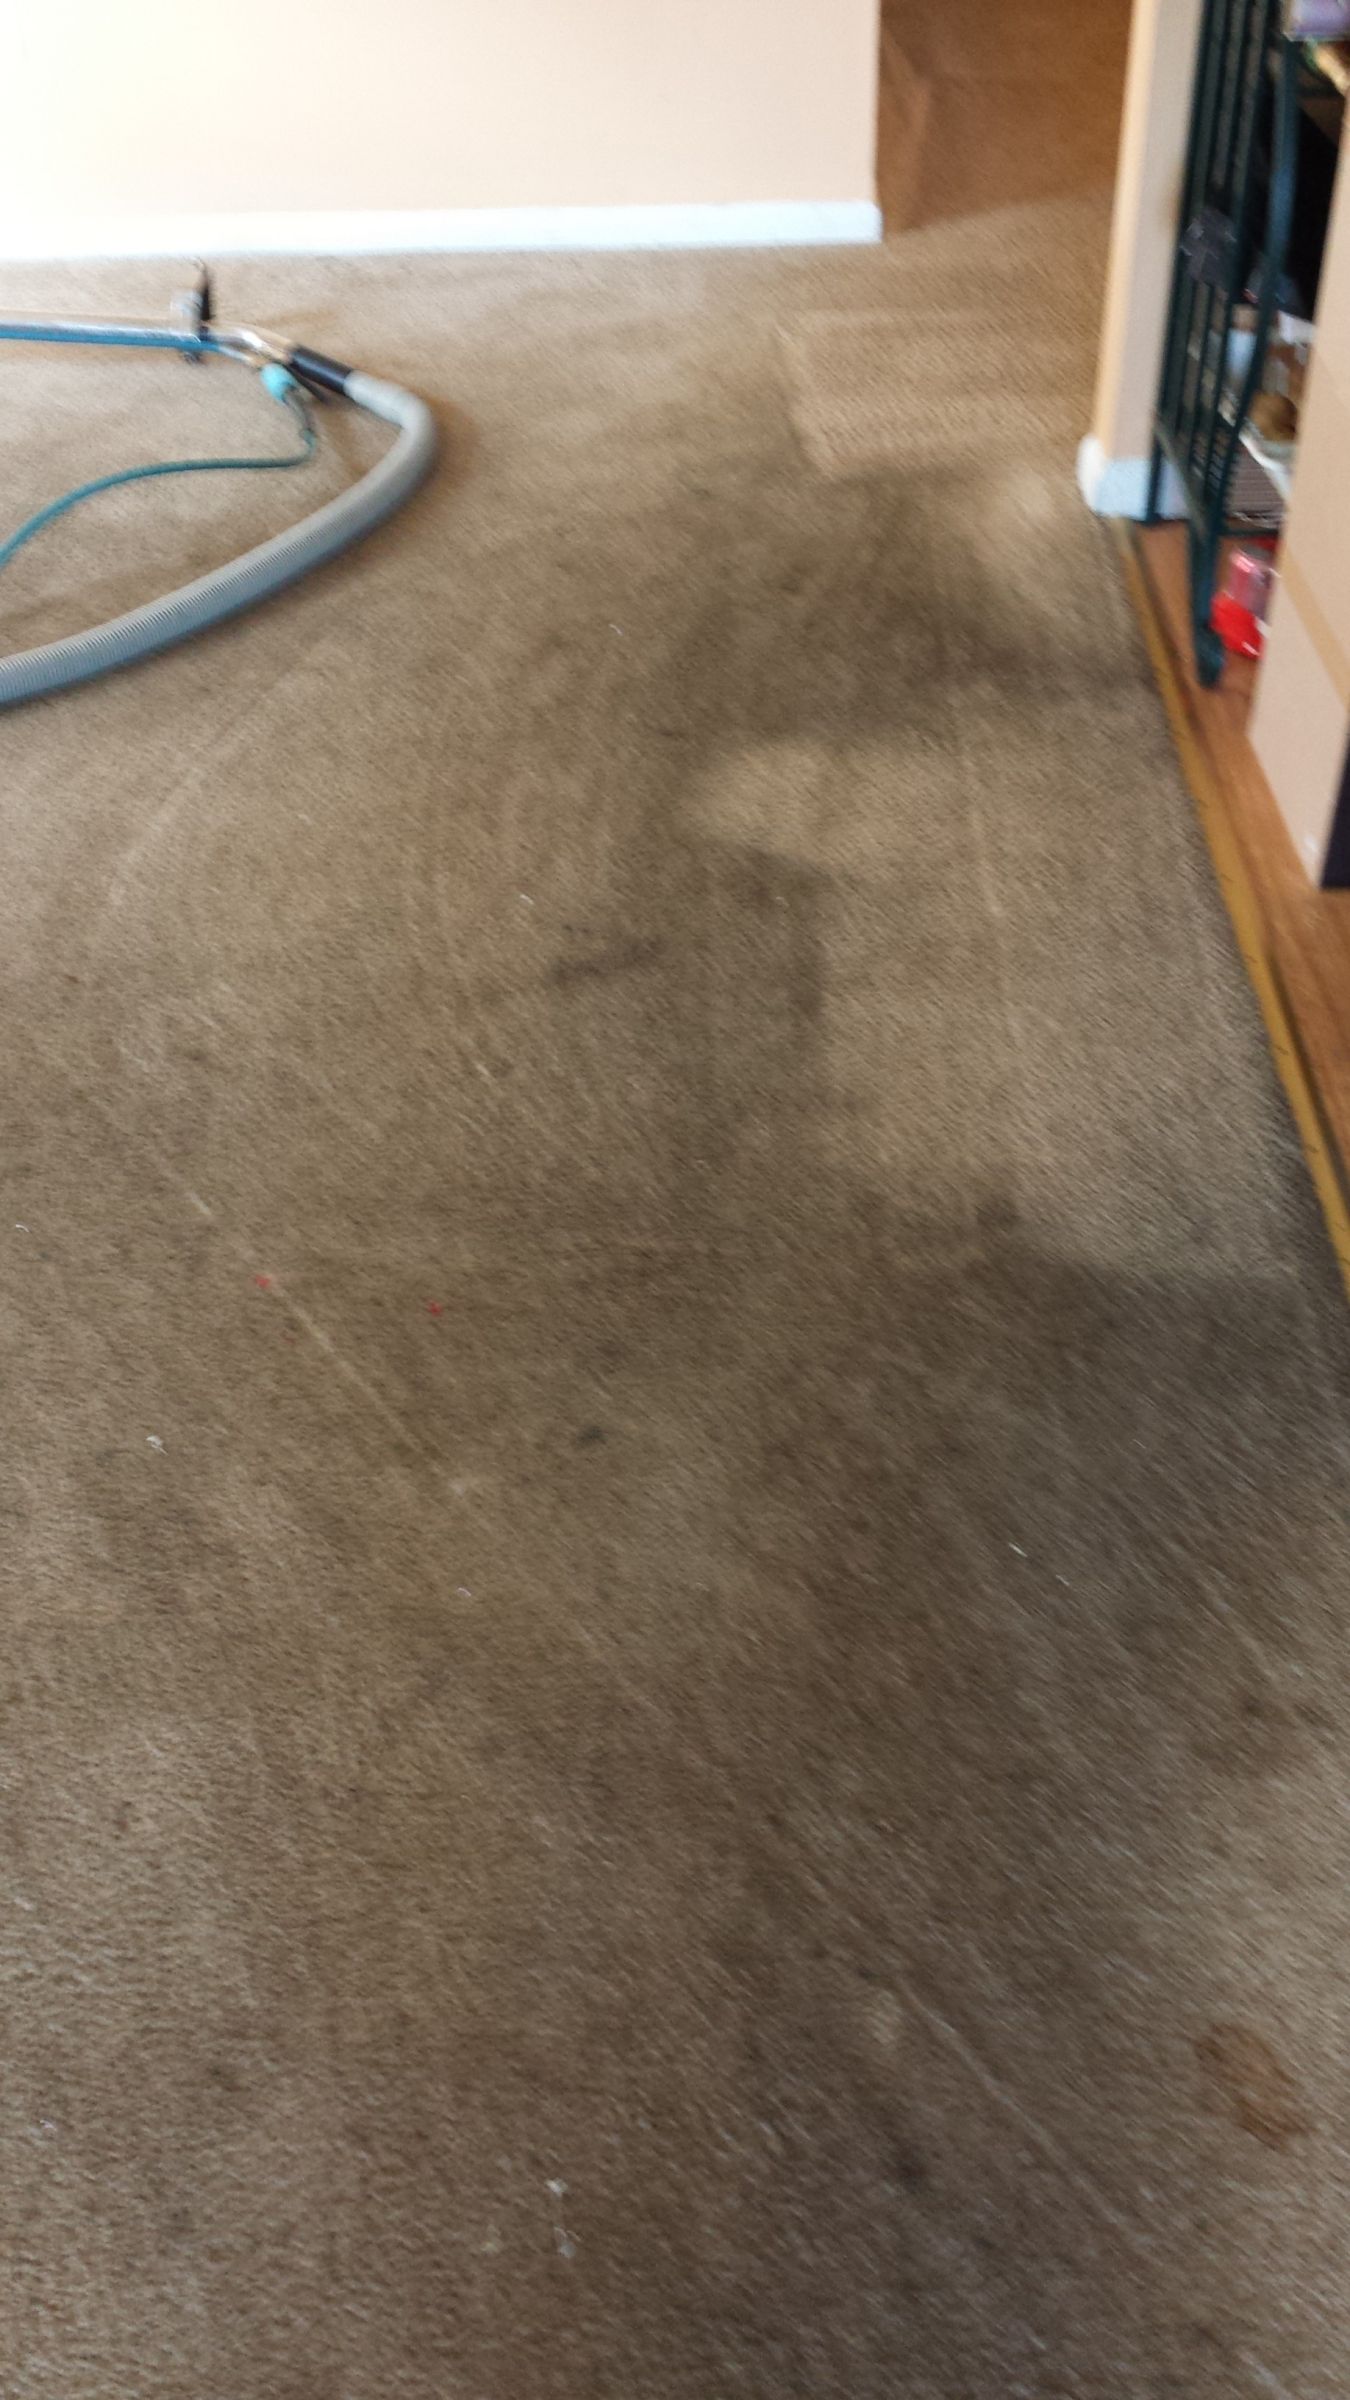 Find Blackwood Carpet Cleaning Experts